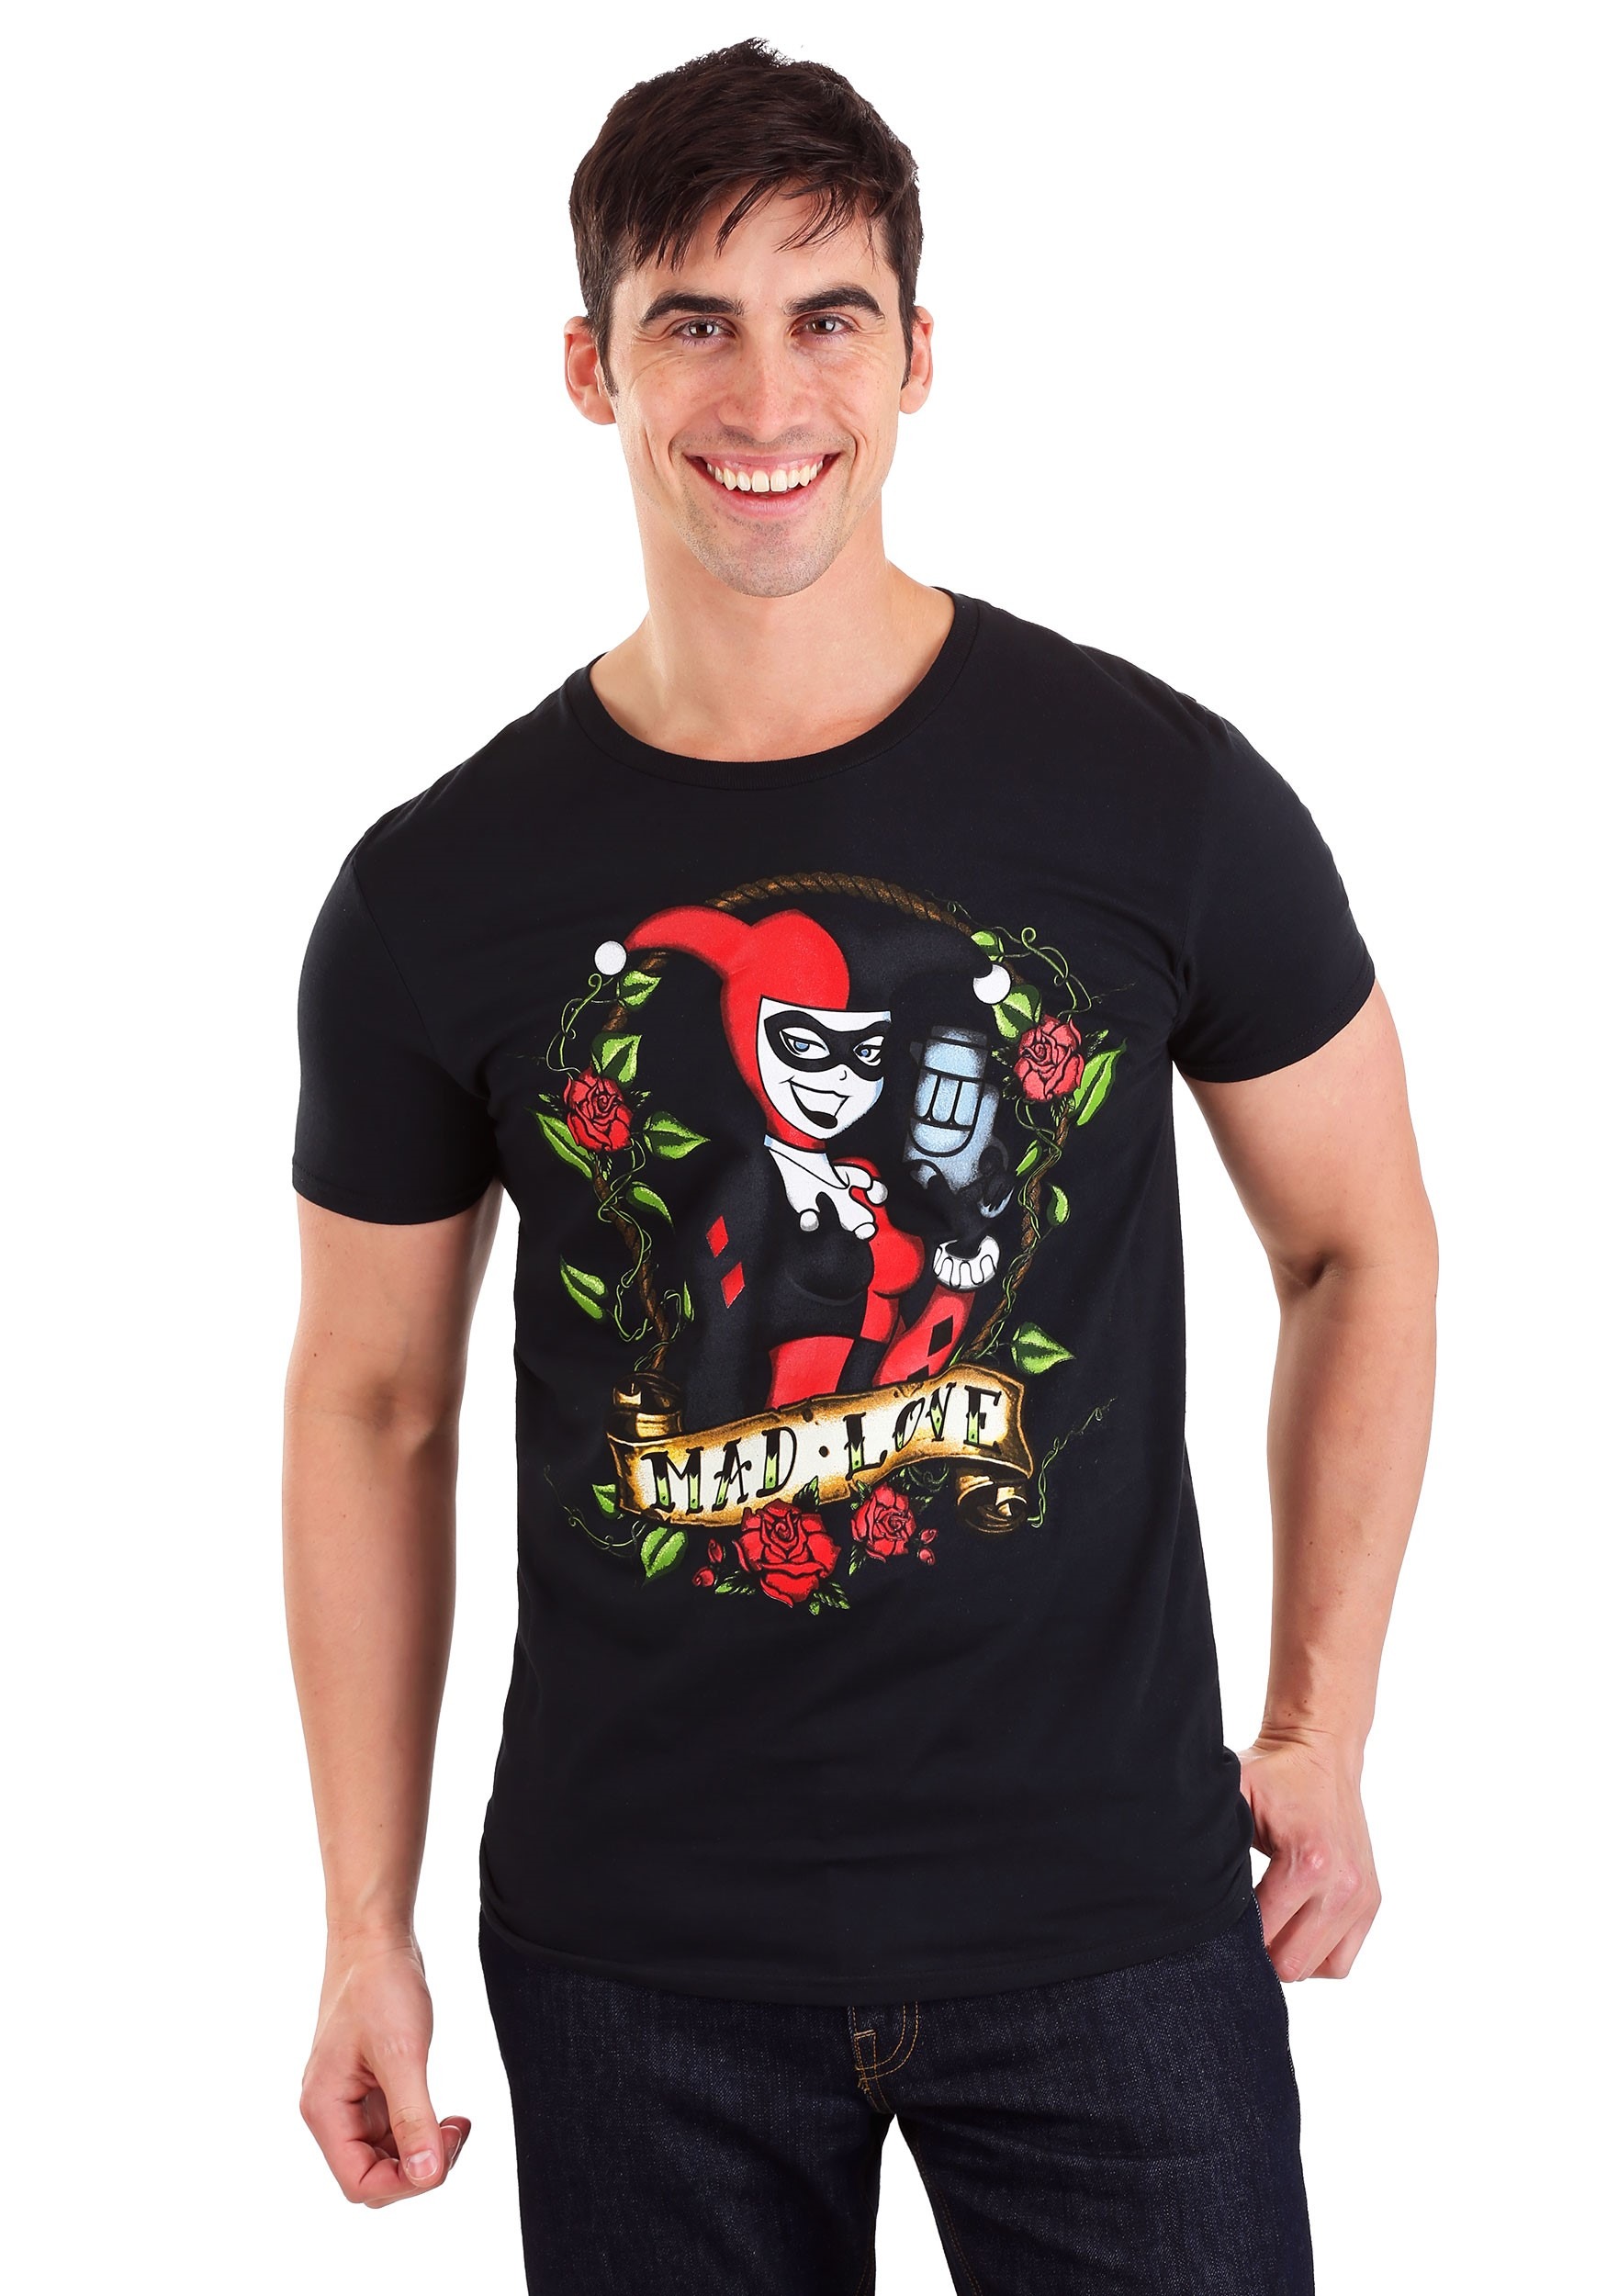 Animated Jester Harley Quinn Mad Love Tattoo Black T-Shirt